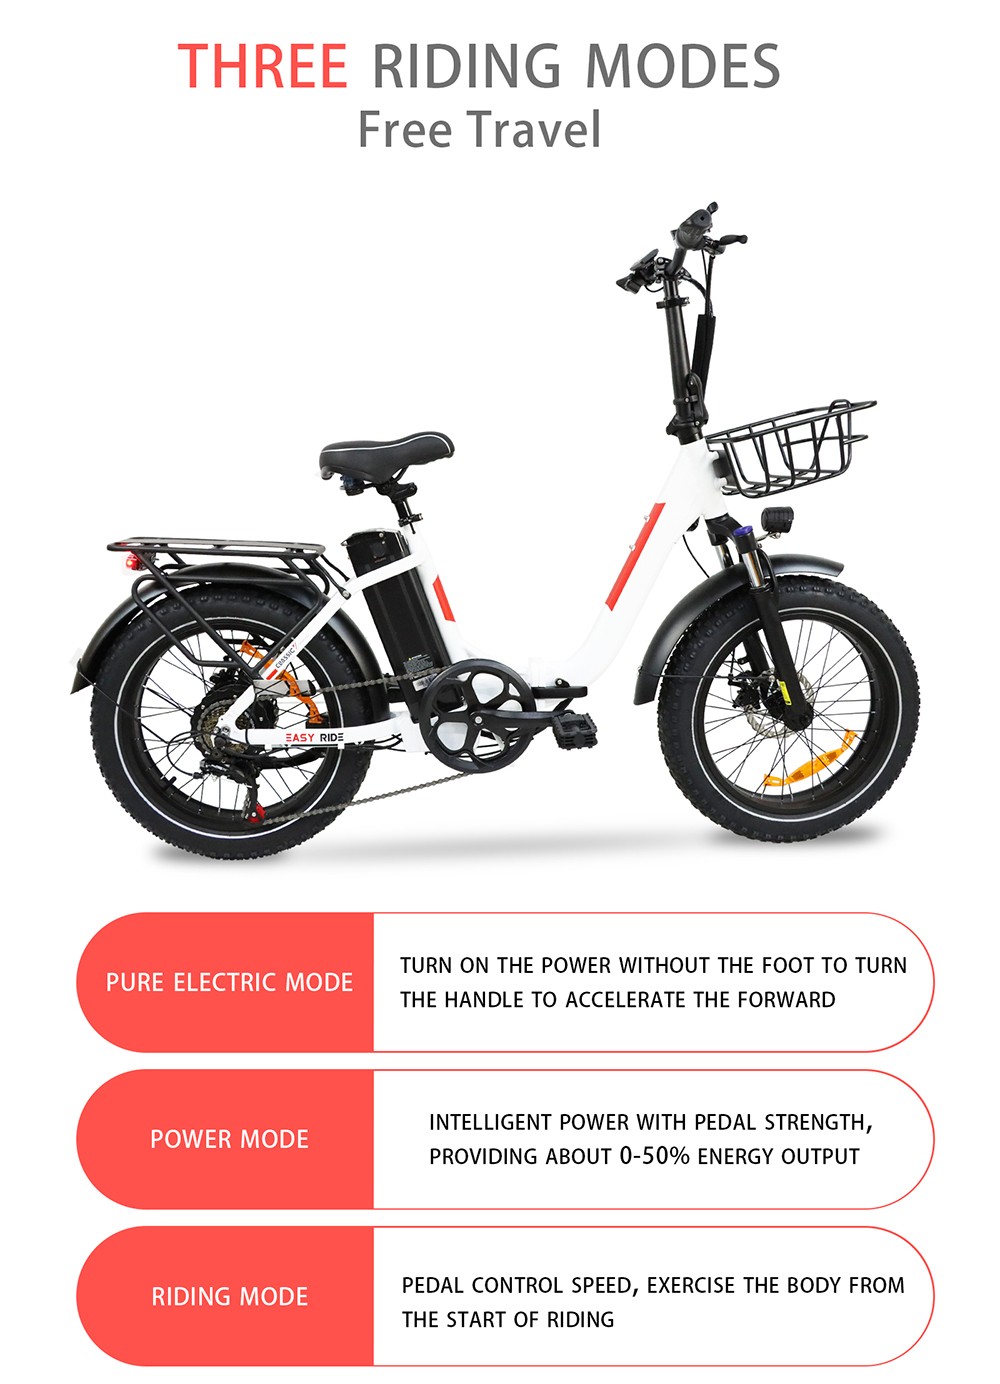 Bicicleta eléctrica BAOLUJIE DZ2030, neumático de 20 * 4.0 pulgadas Motor de 500 W 48 V 13 Ah Batería extraíble 40 km / h Velocidad máxima 35-45 km Alcance SHIMANO 7 velocidades - Negro